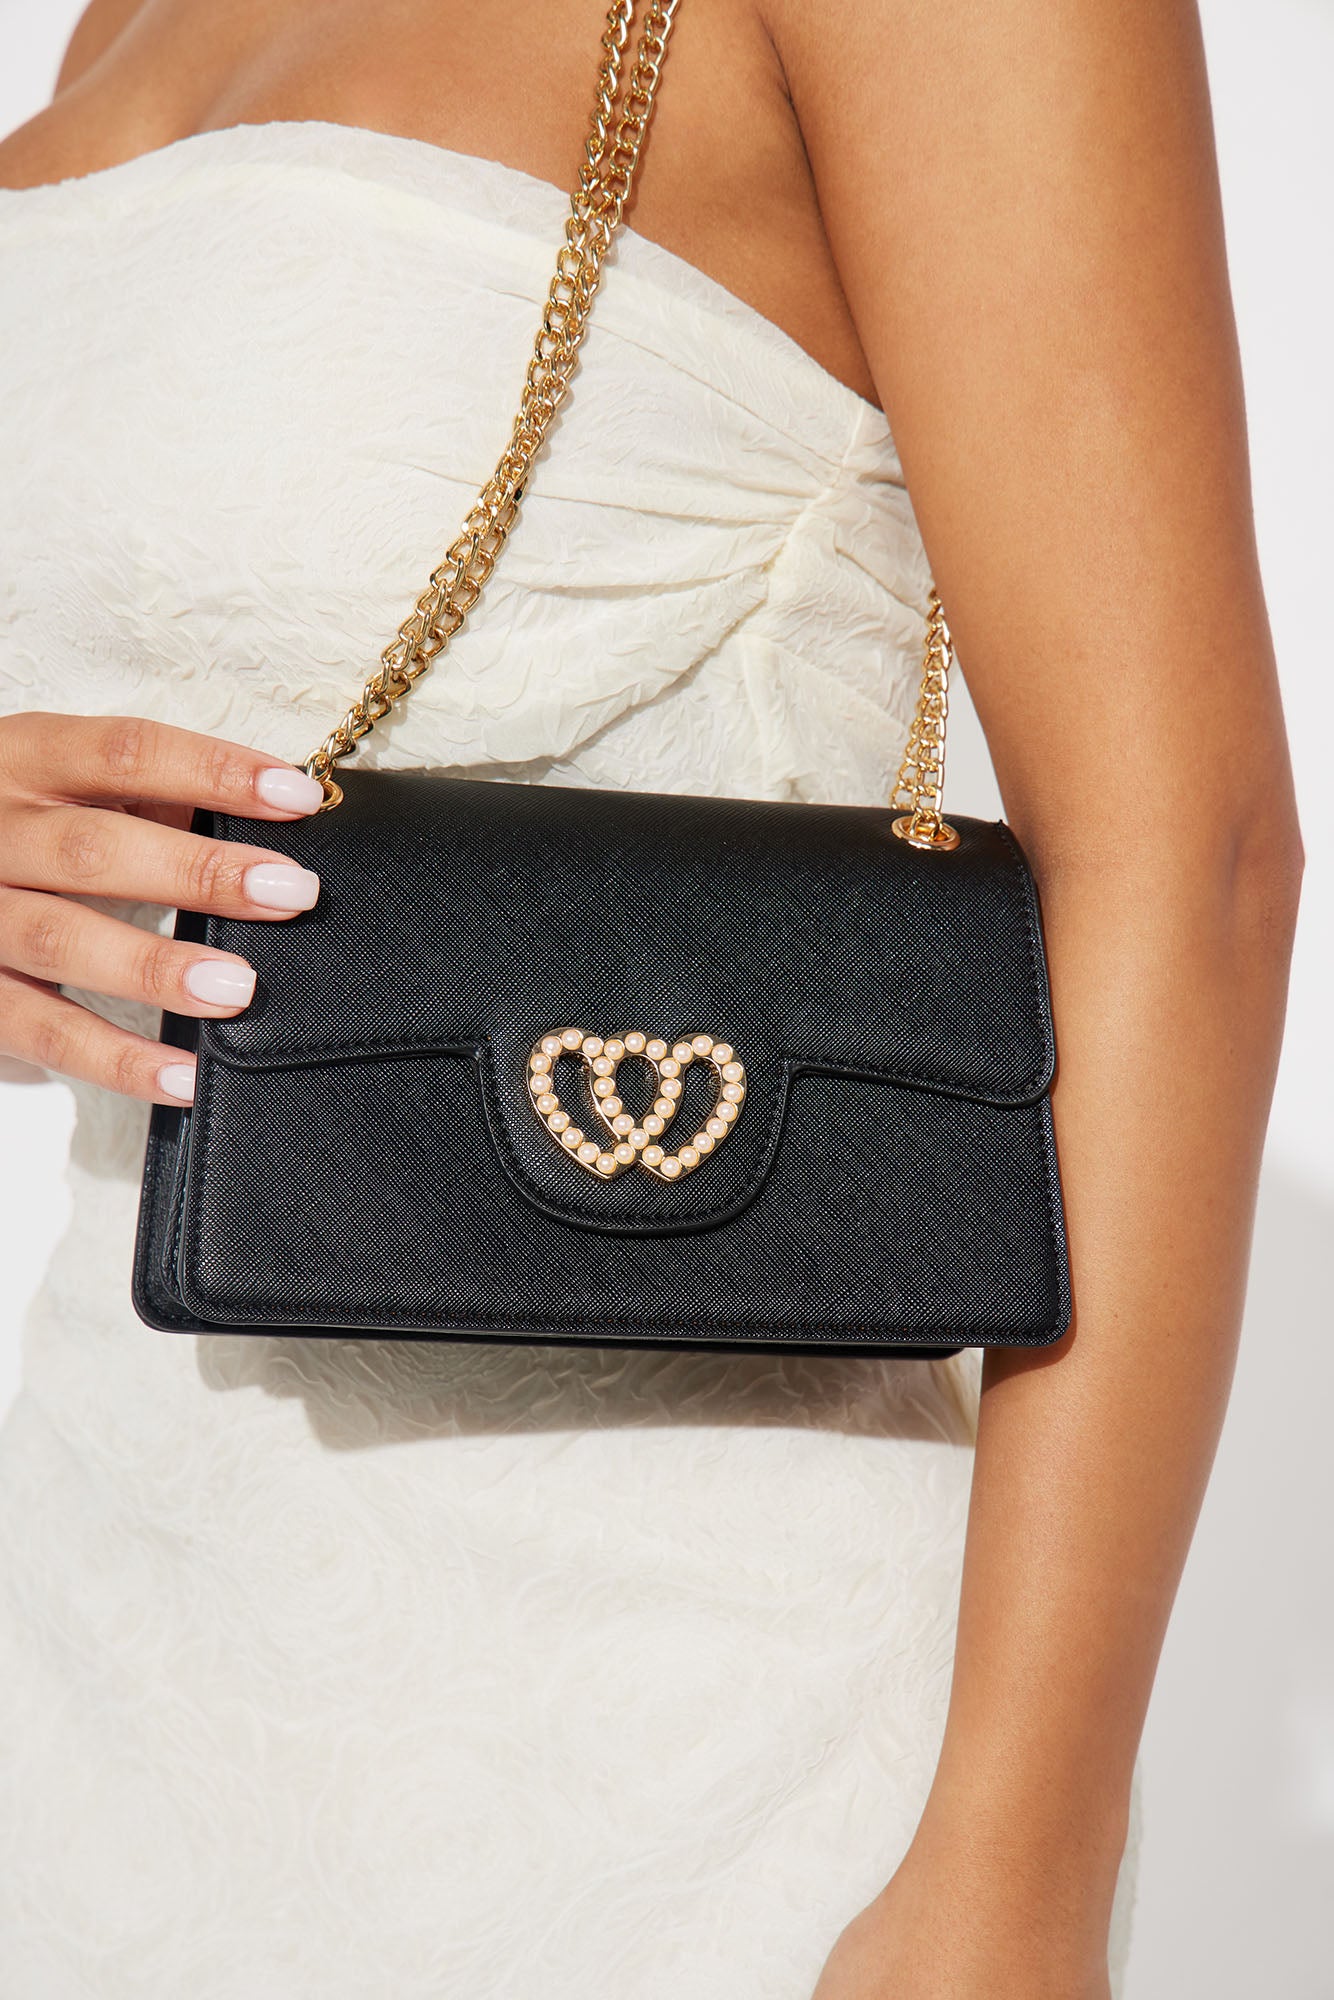 Women's Found Love Crossbody Bag in Black by Fashion Nova